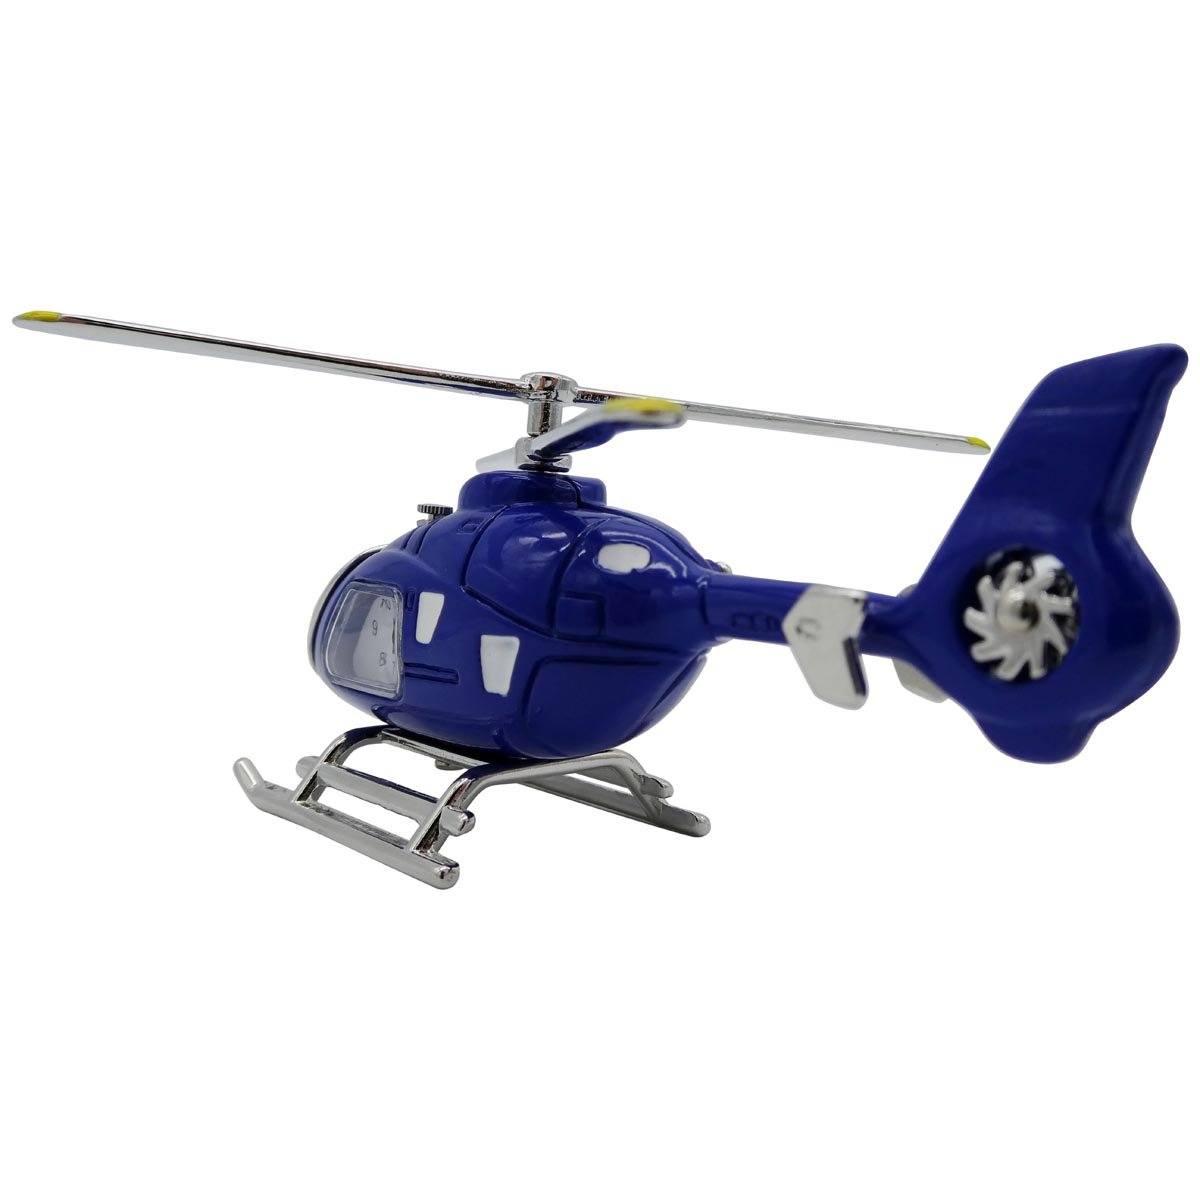 Pilot Toys Blue Helicopter Desk Clock